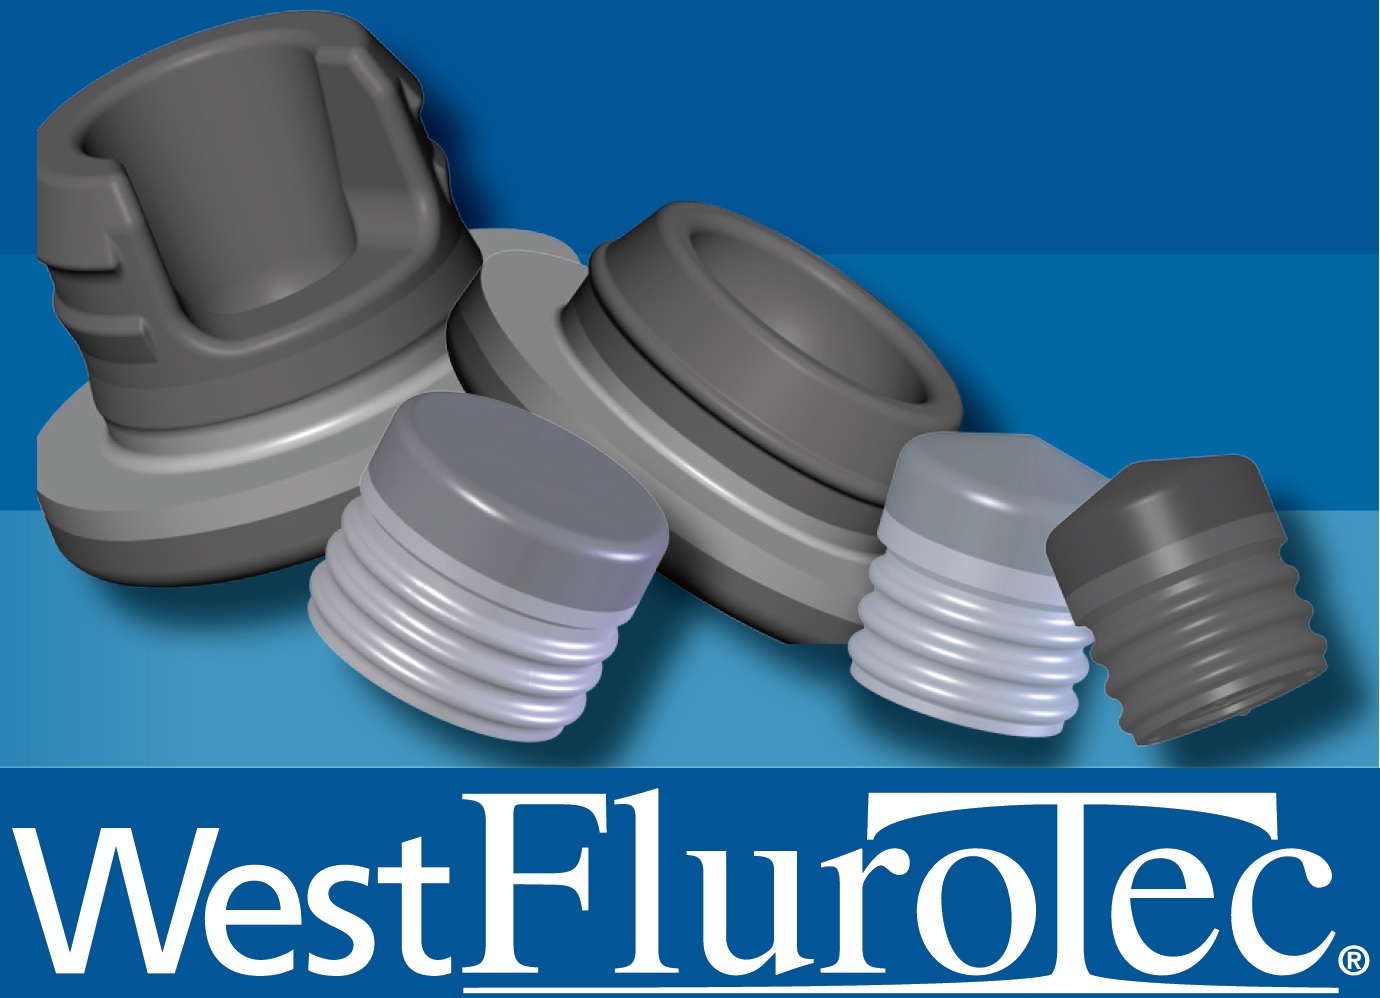 FluroTec® 覆膜产品确保药品的安全